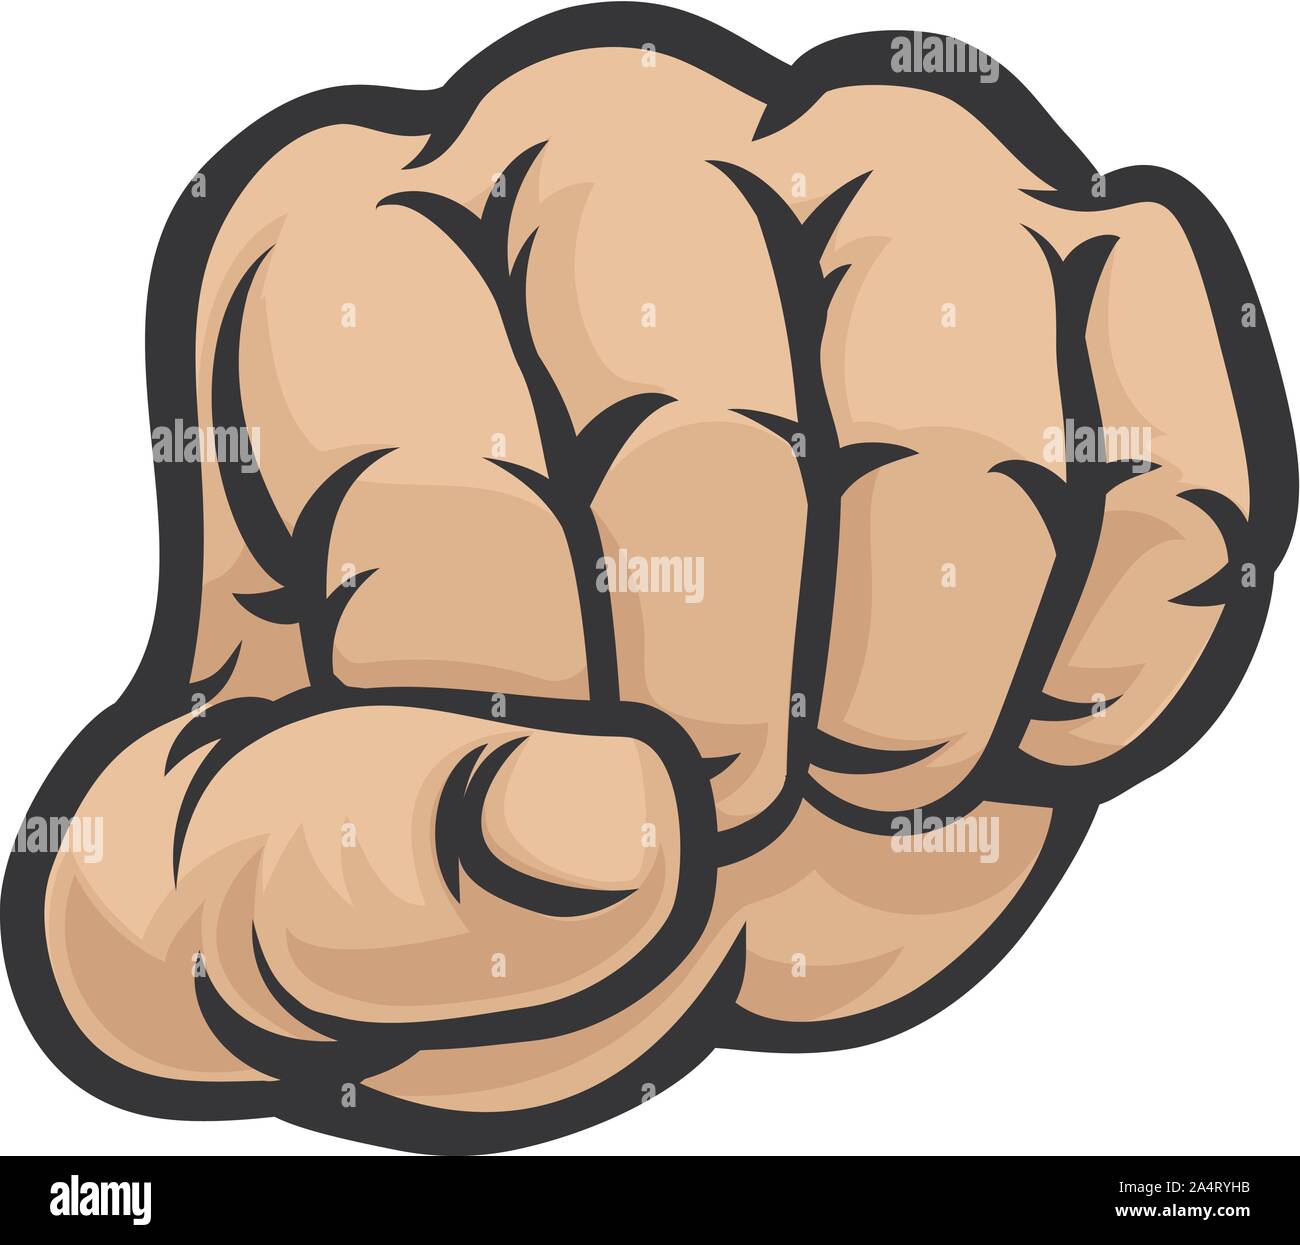 Fist Punch Hand Cartoon Stock Vector